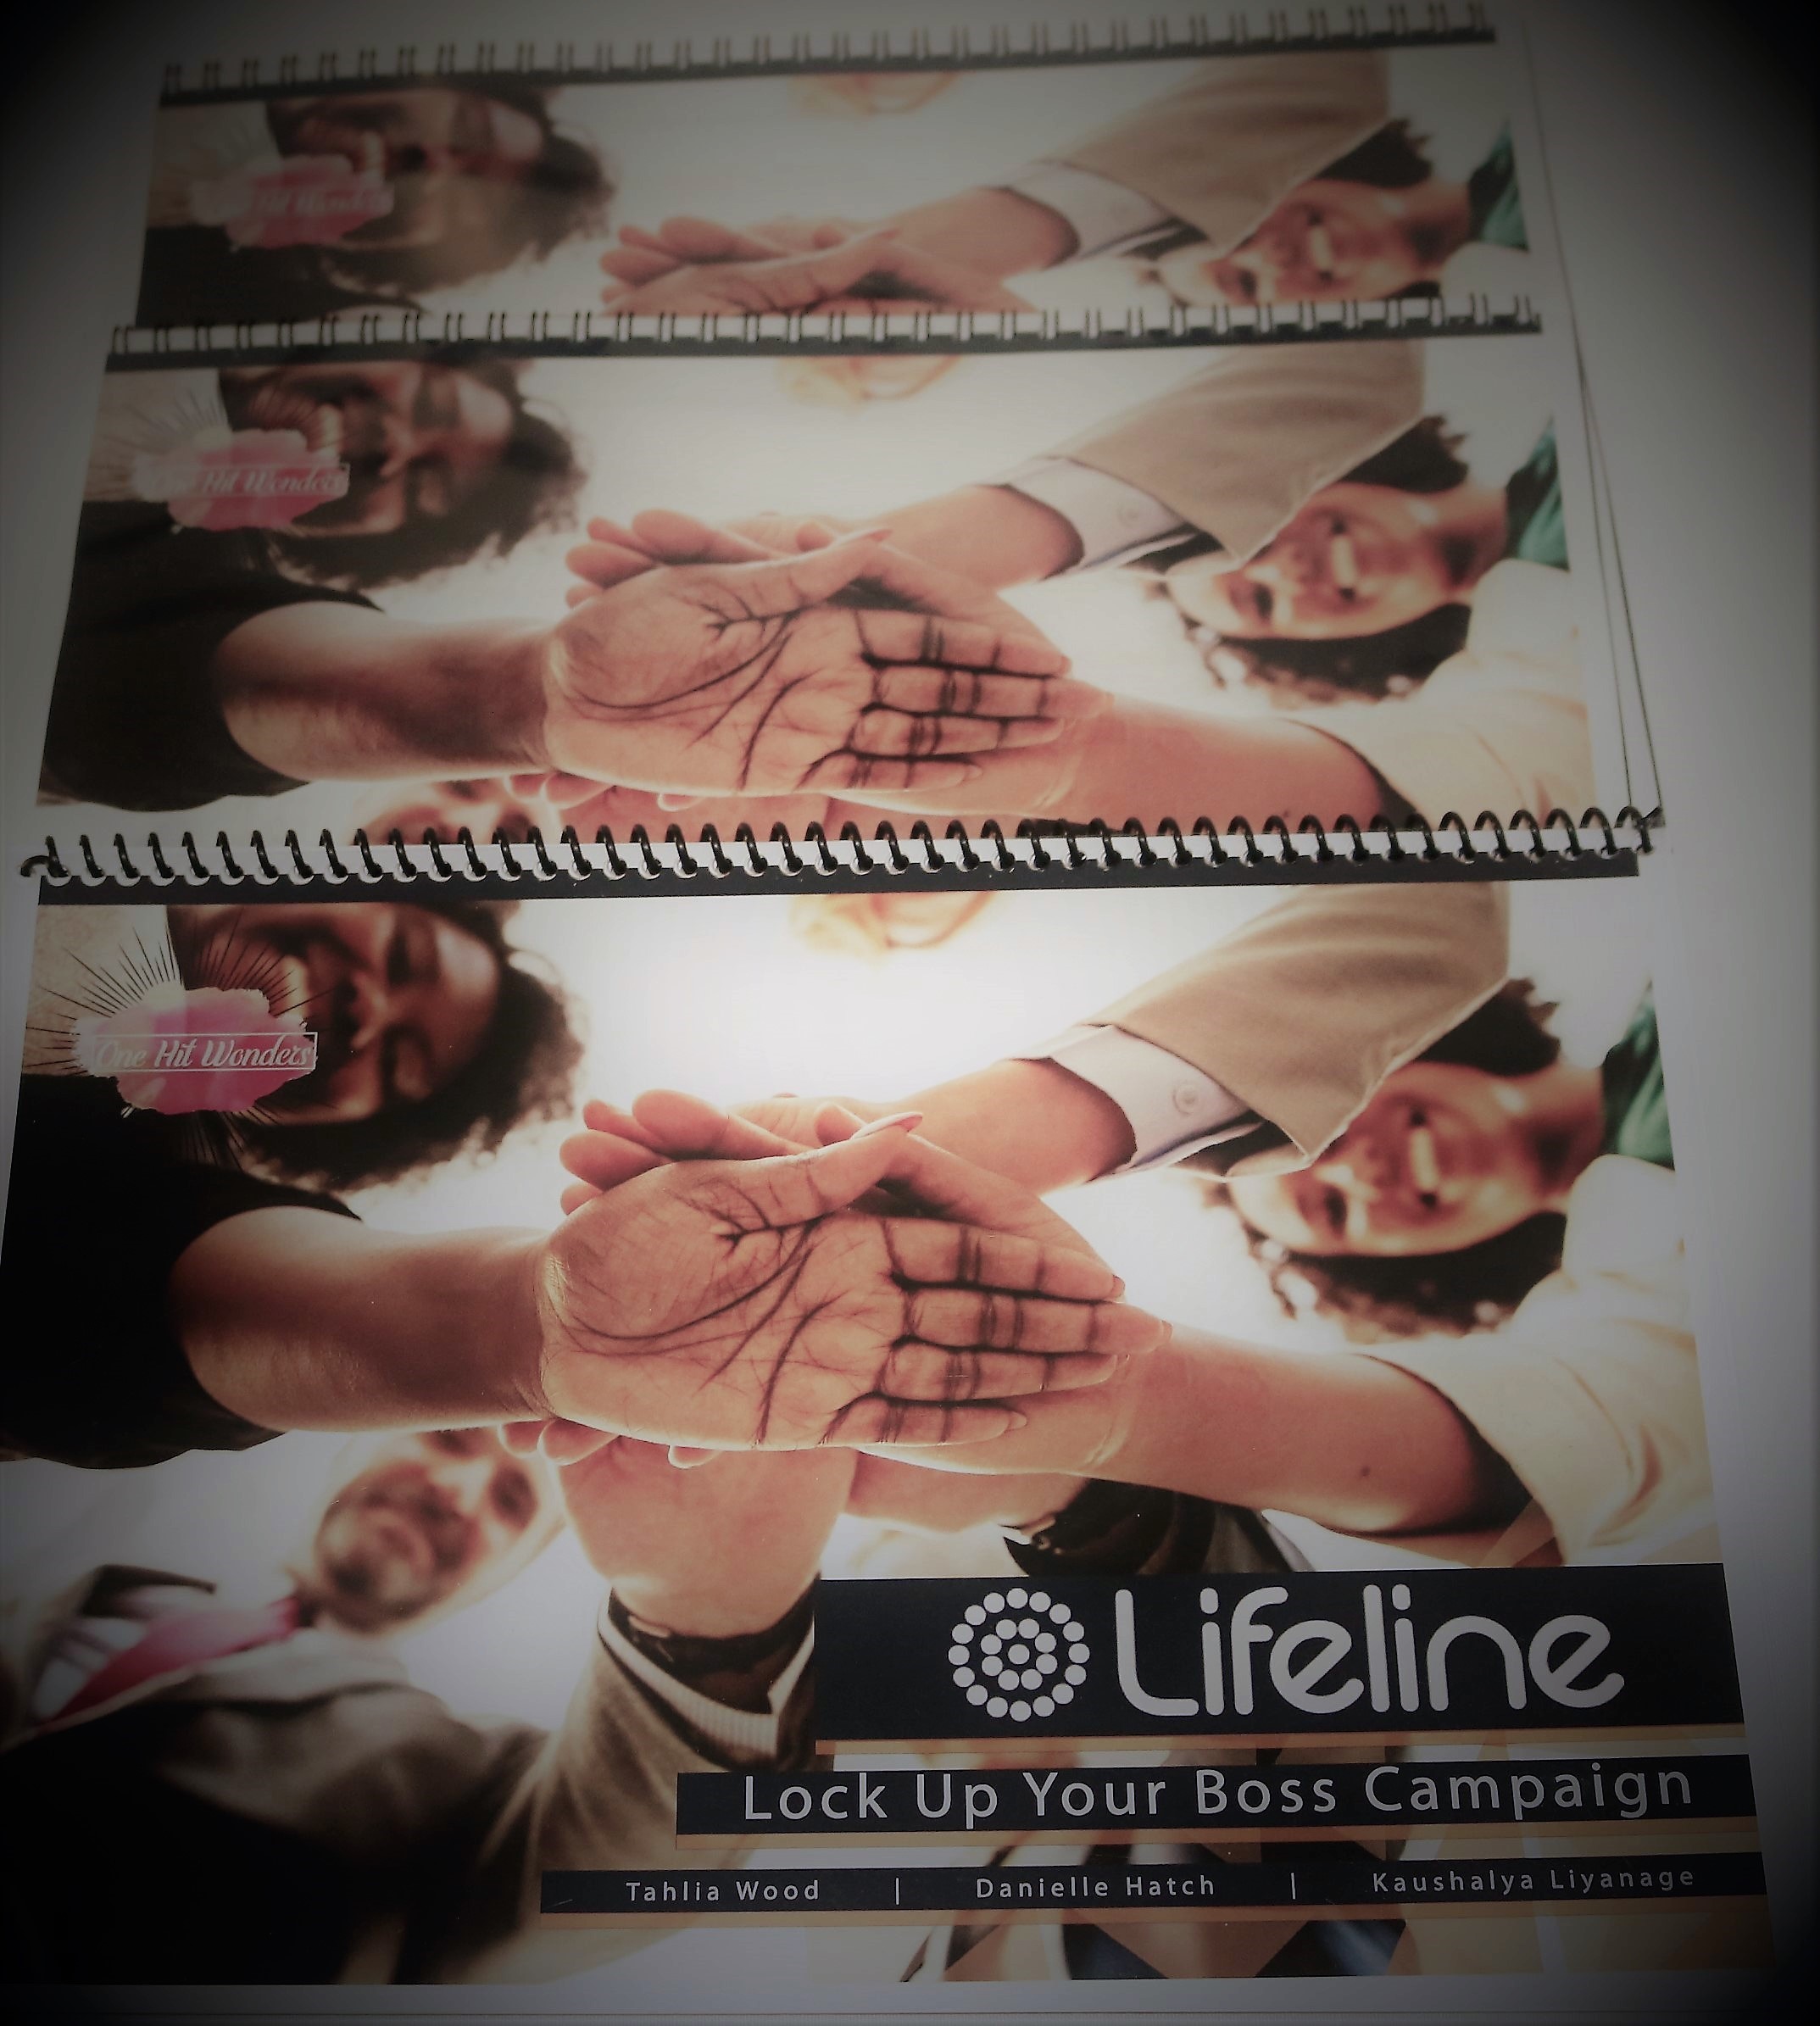 Image of Lifeline pitch documents